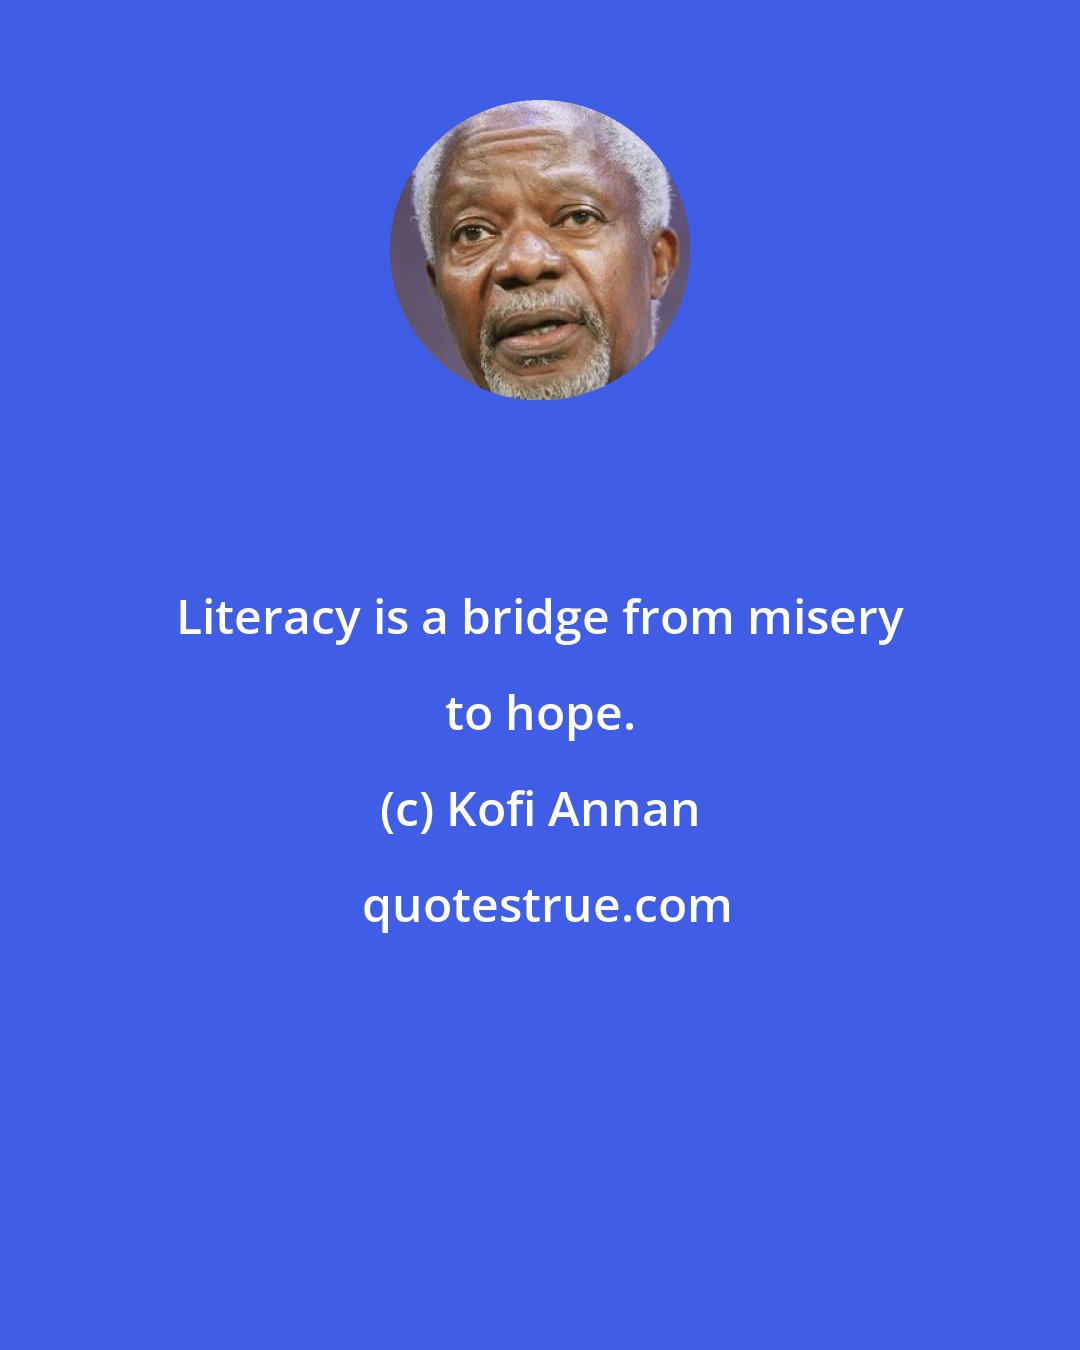 Kofi Annan: Literacy is a bridge from misery to hope.